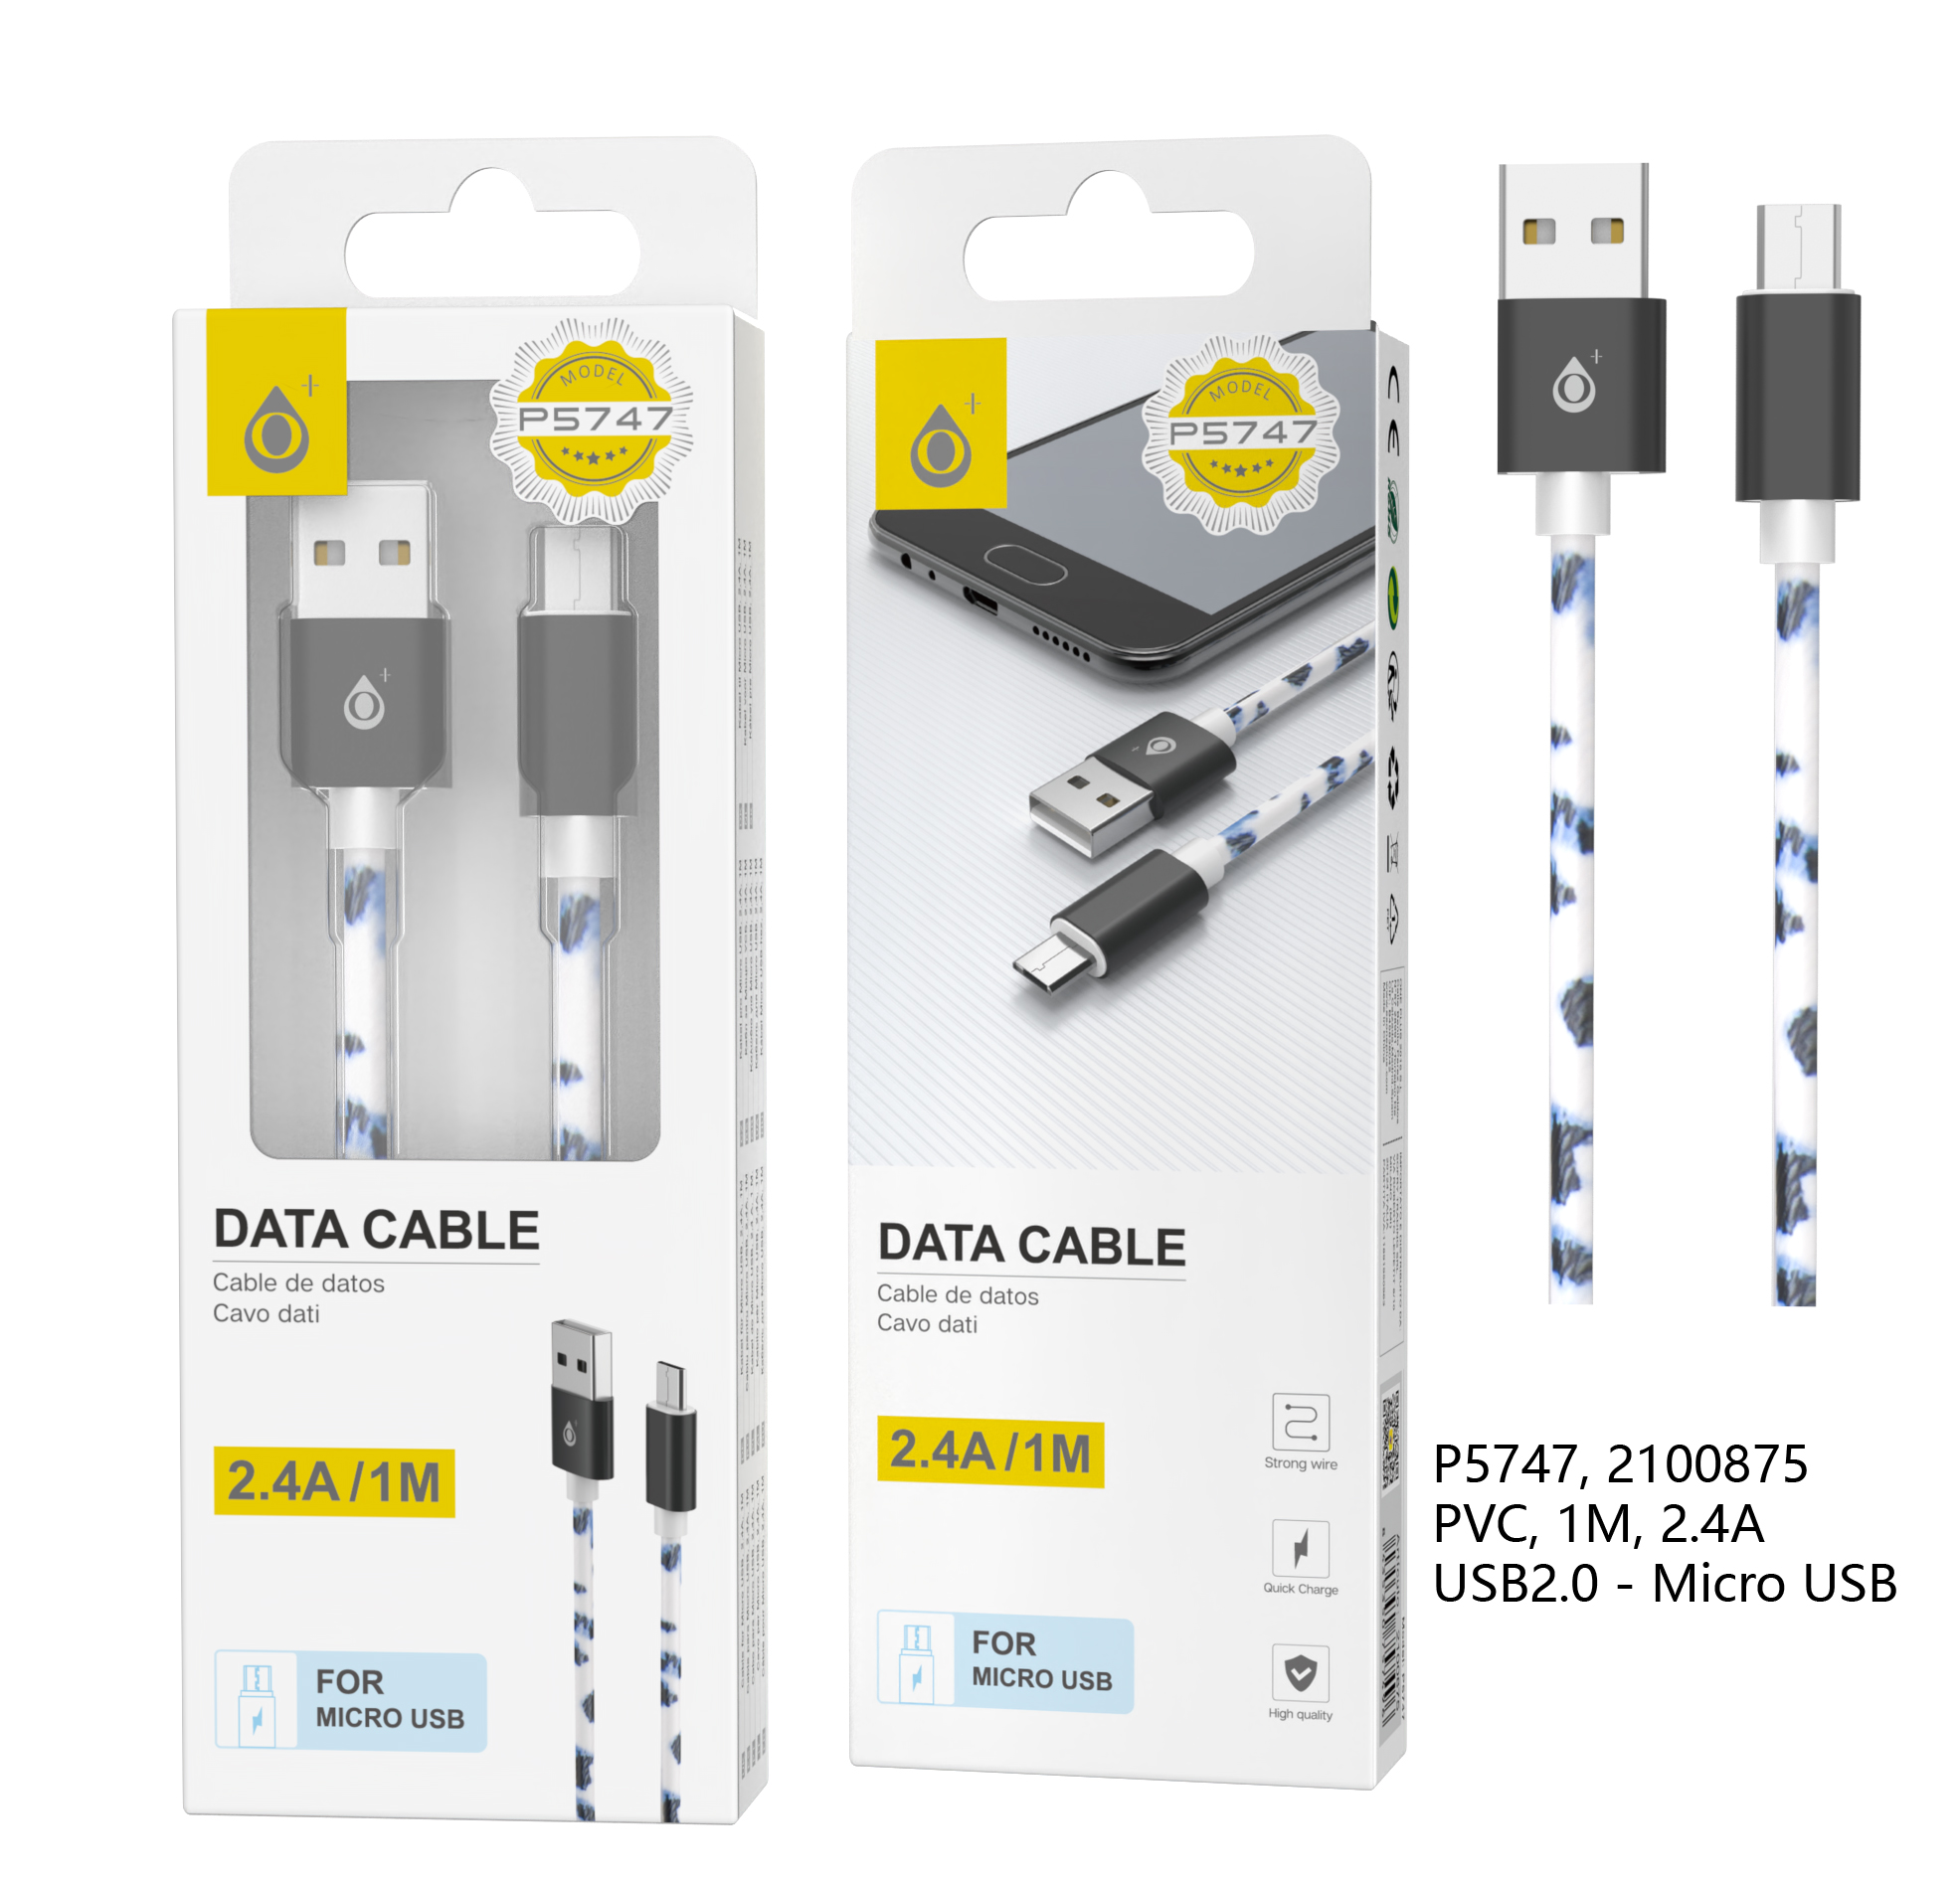 P5747 Cable de Datos Rainbow Para Micro USB , 2.4A/1M